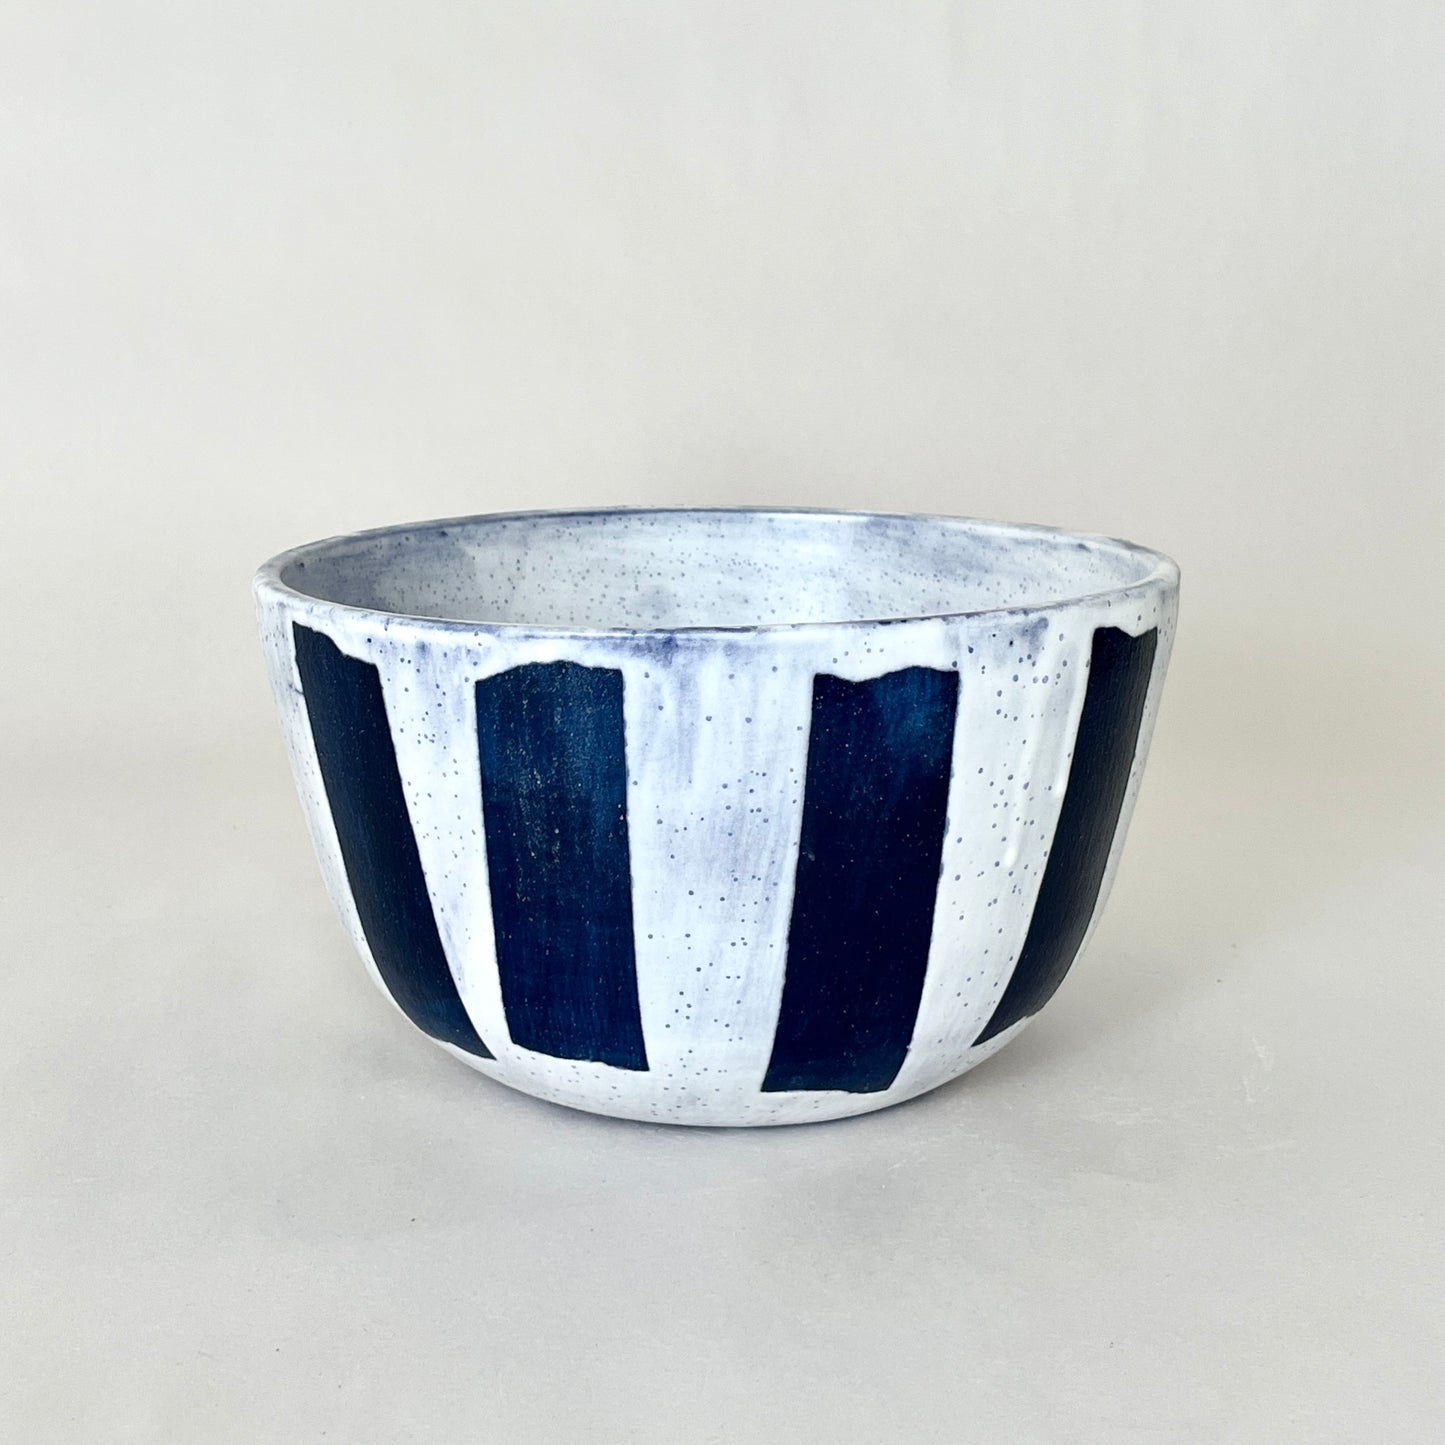 Painter Tape Bowl, Medium White/Blue